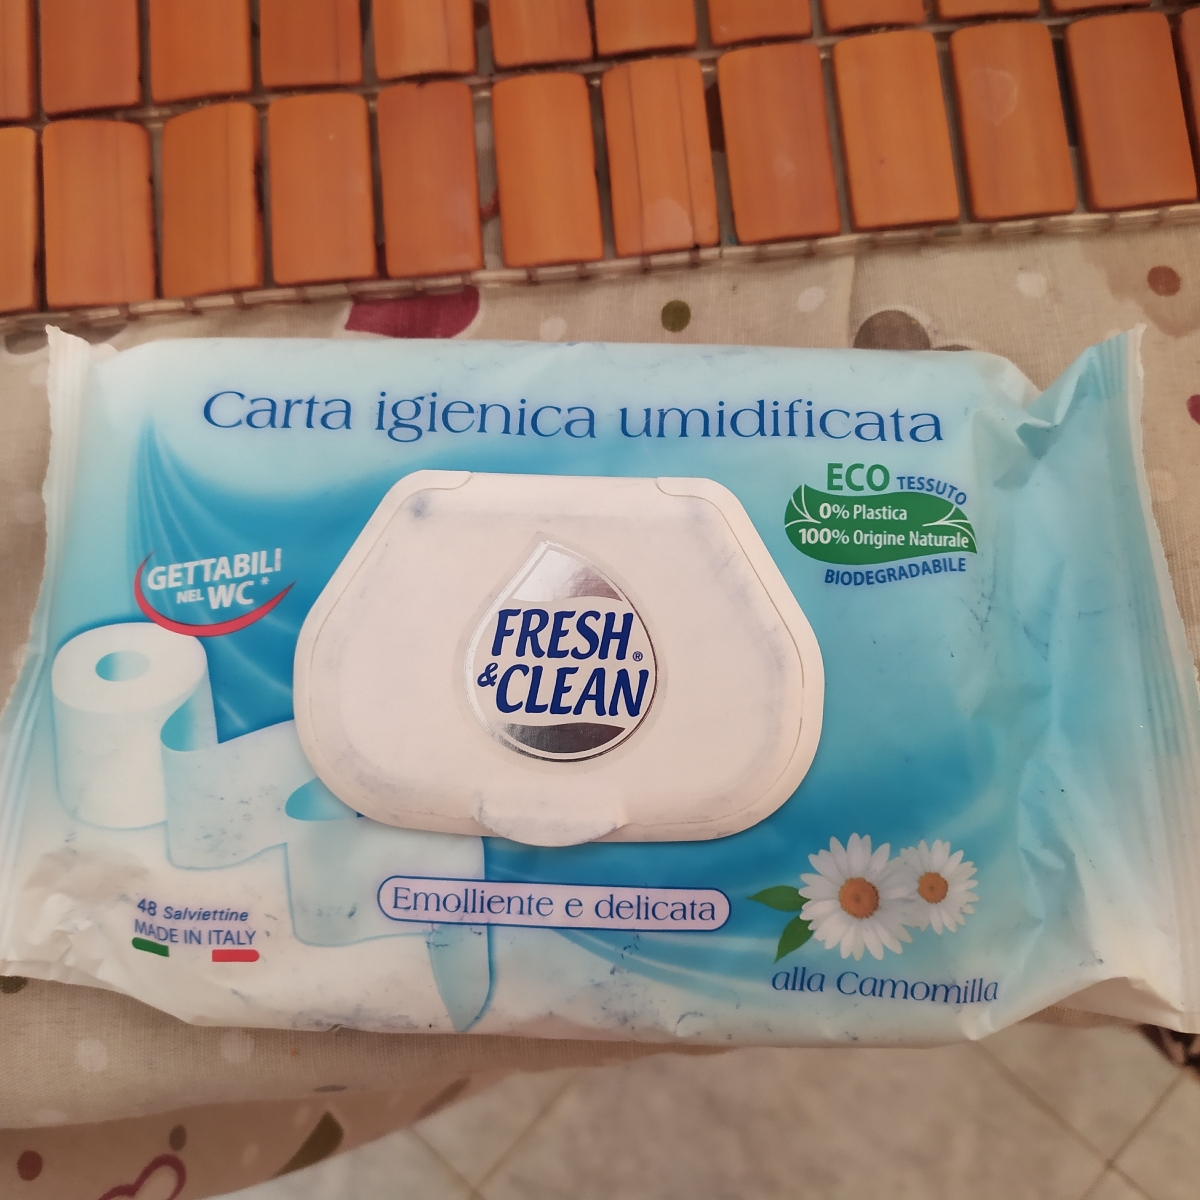 Fresh&Clean carta igienica umidificata Review